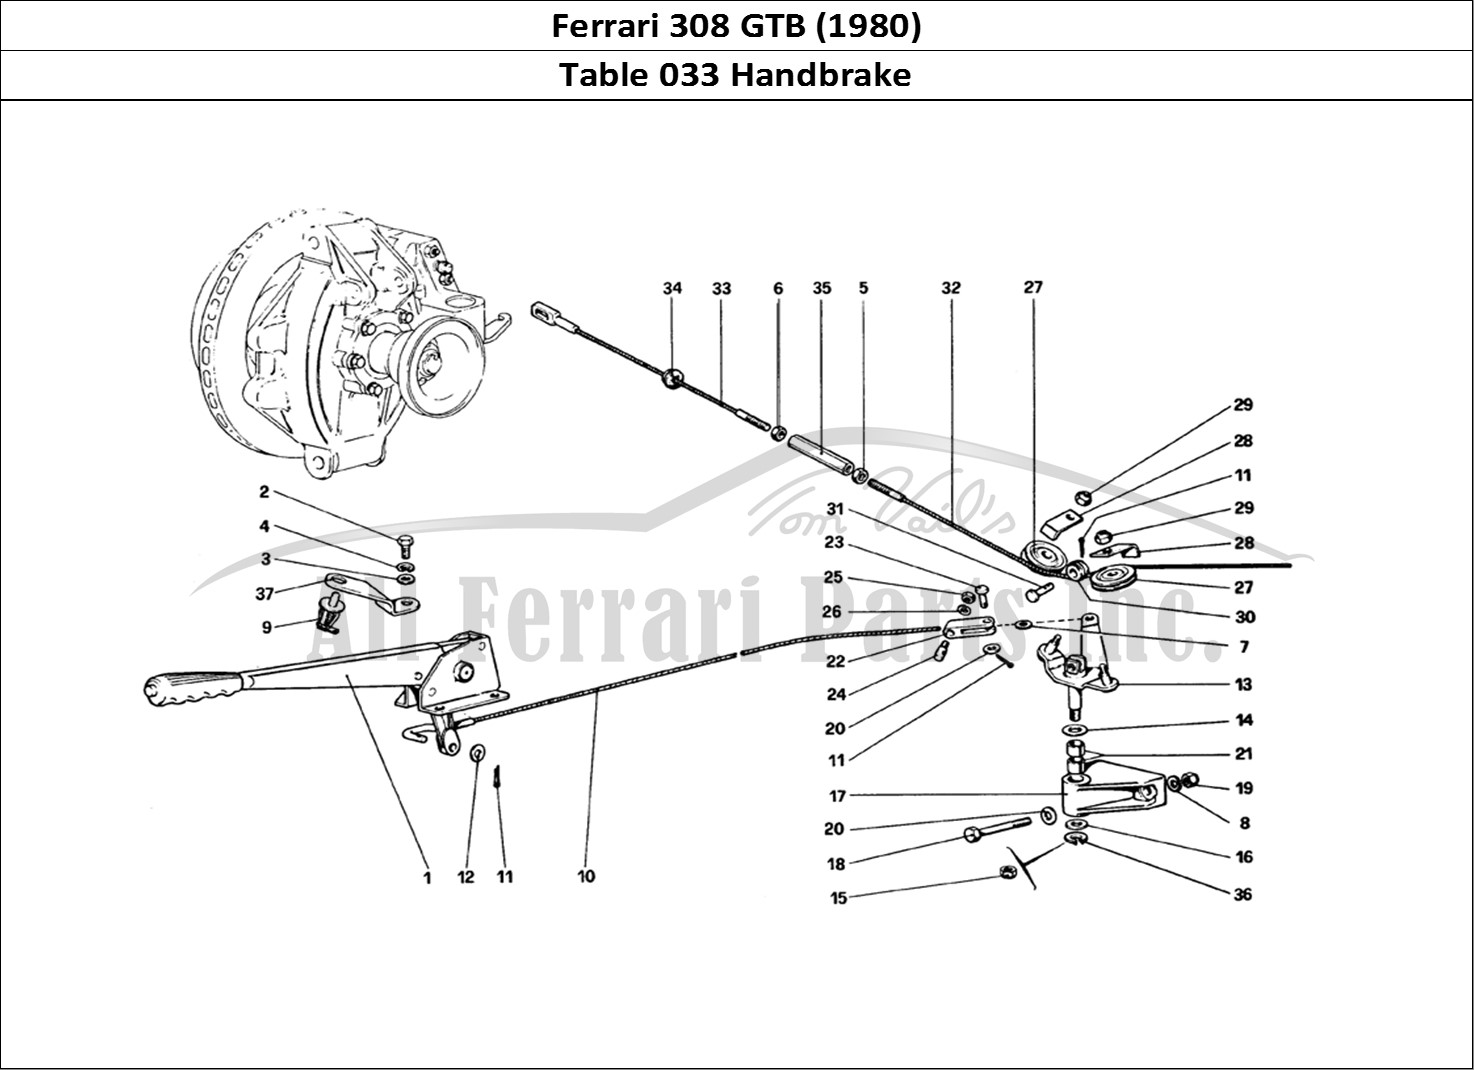 Ferrari Parts Ferrari 308 GTB (1980) Page 033 Hand-Brake Control